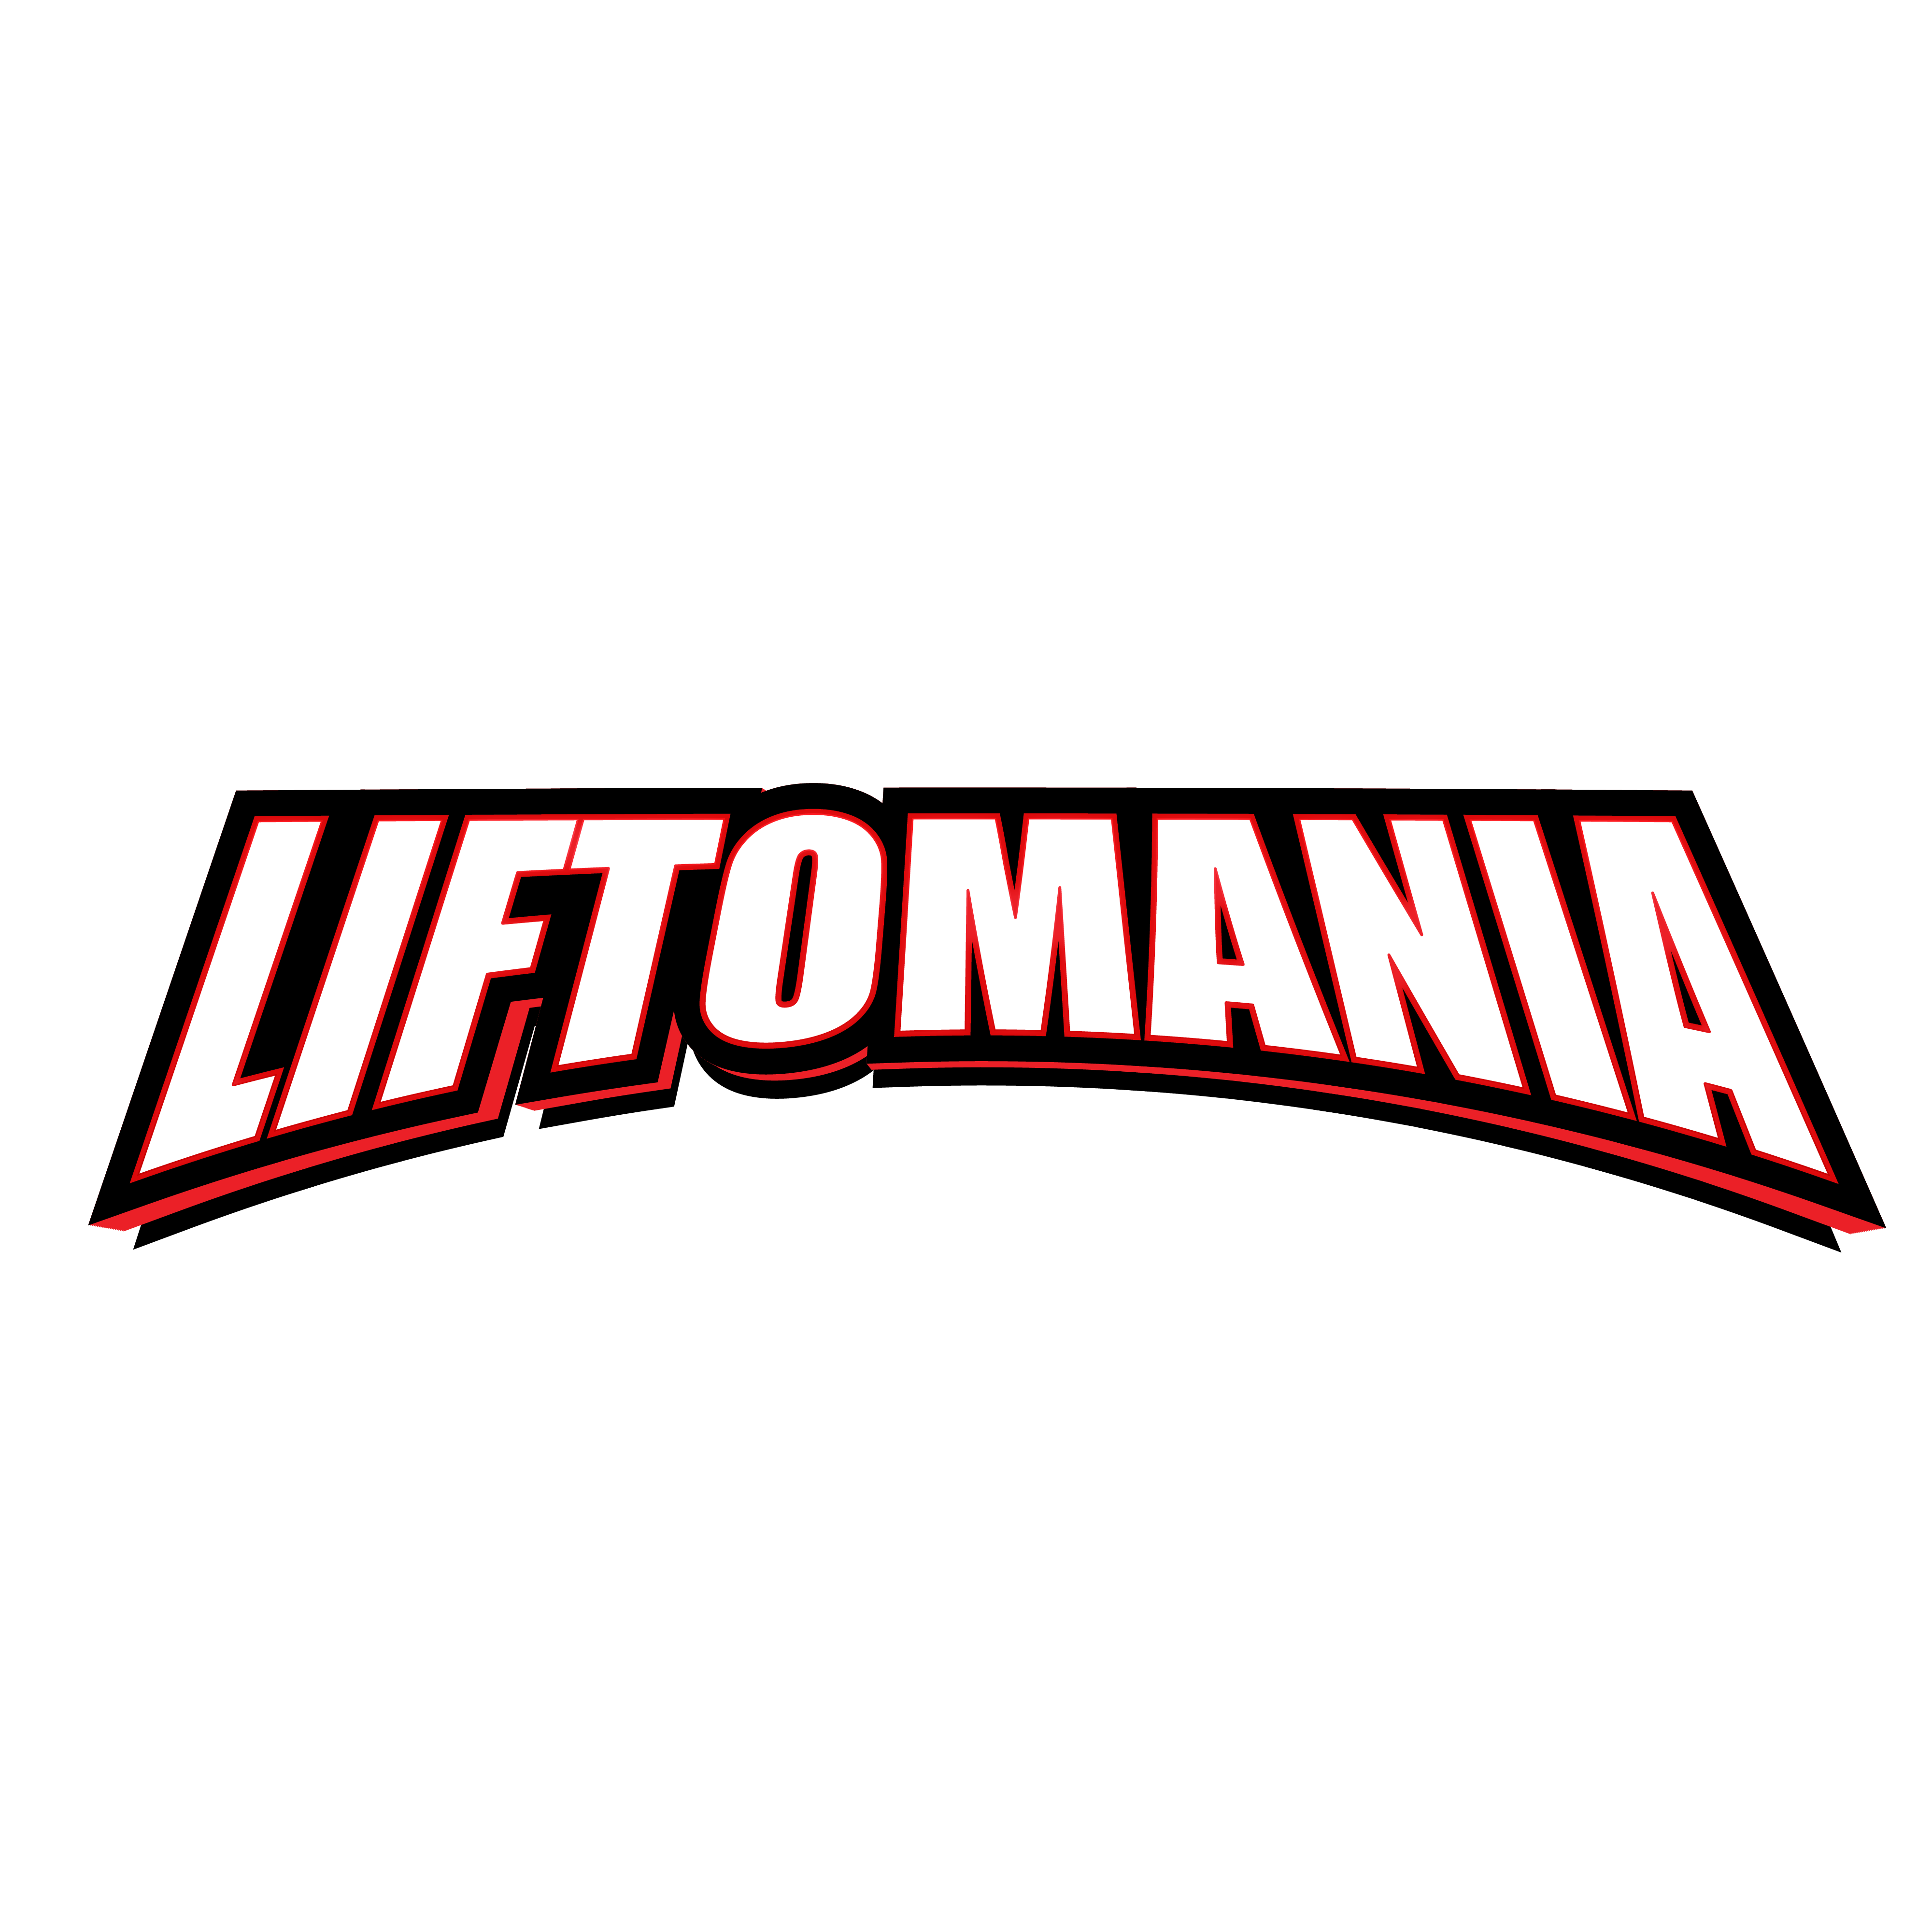 Liftomania Logo